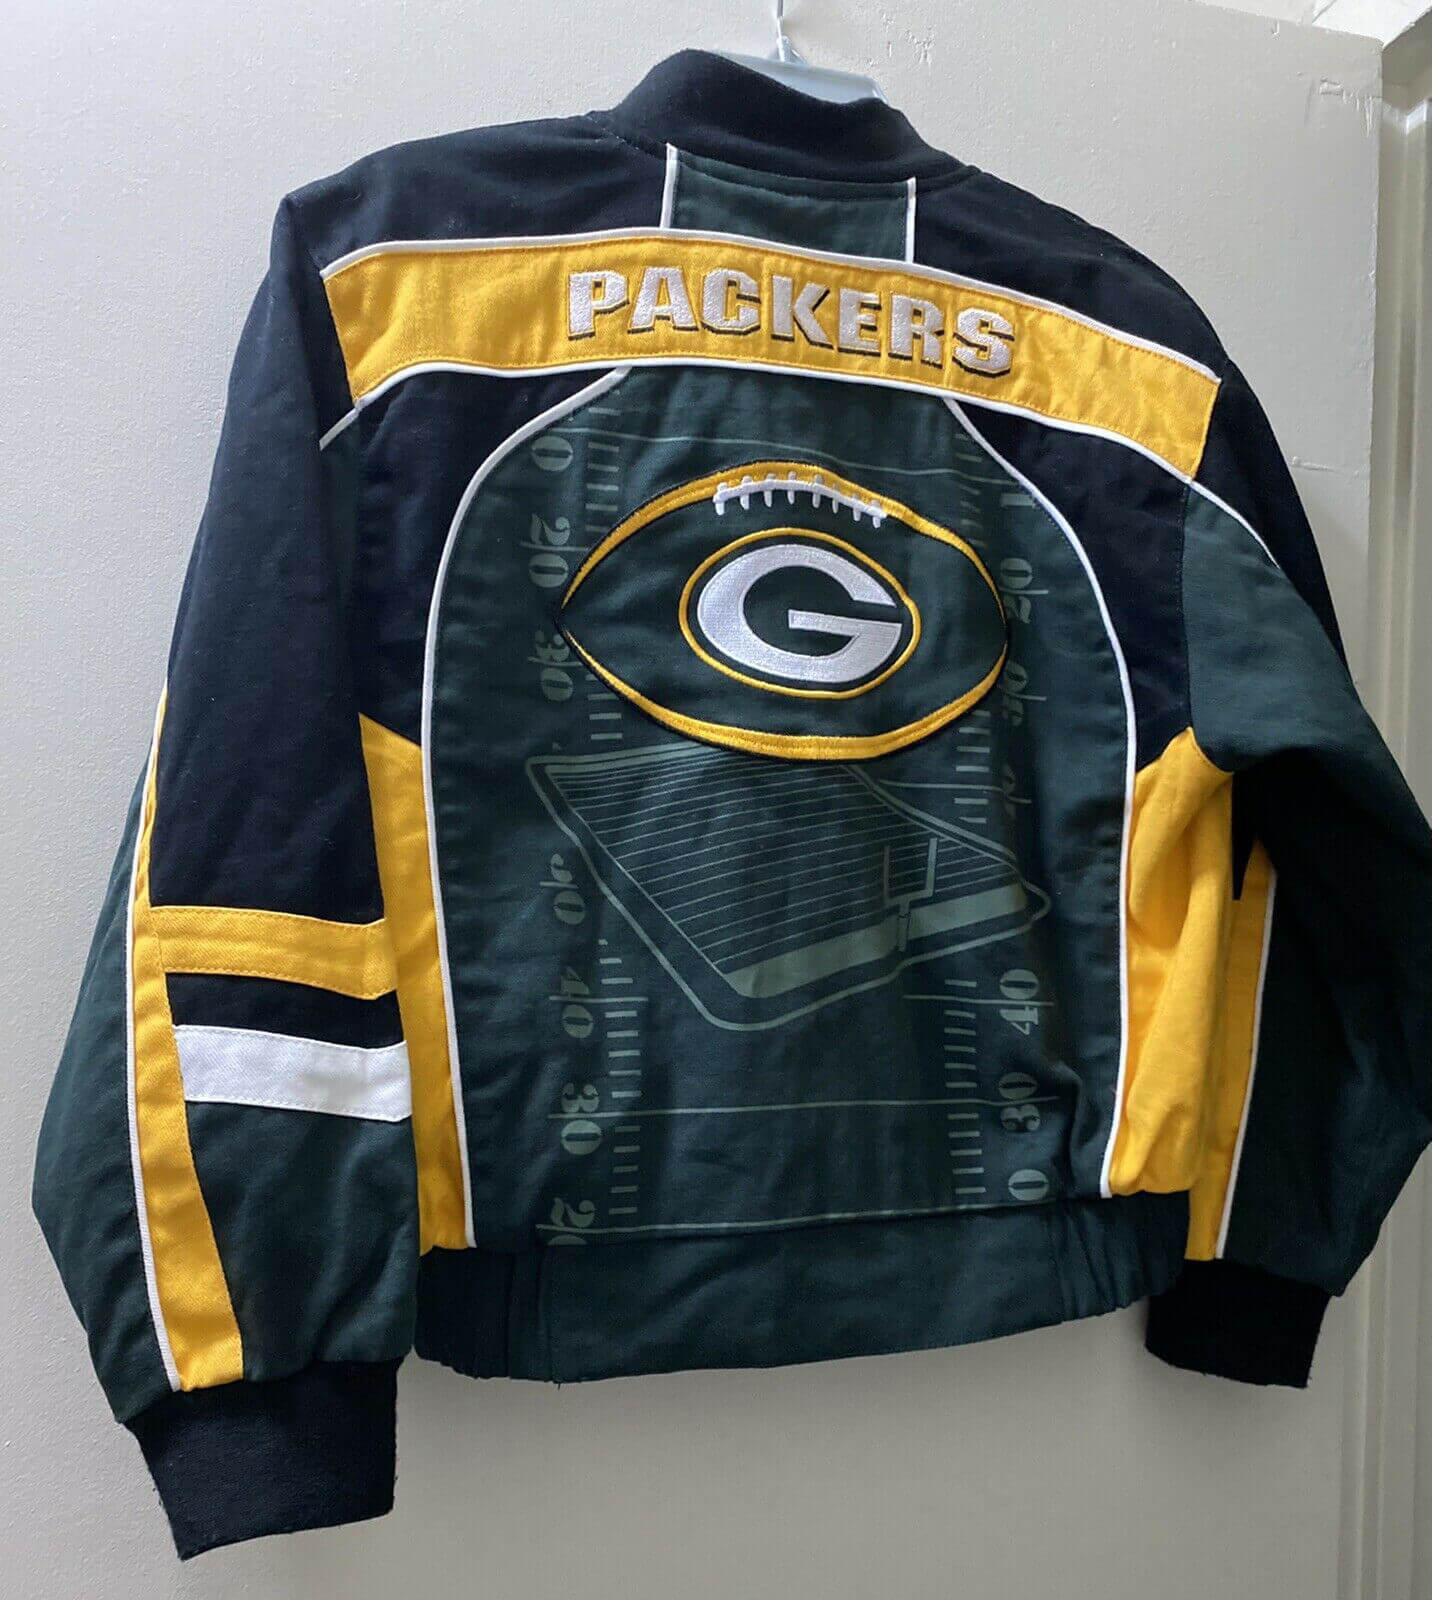 Vintage 90s NFL Green Bay Packers Varsity Jacket - Maker of Jacket